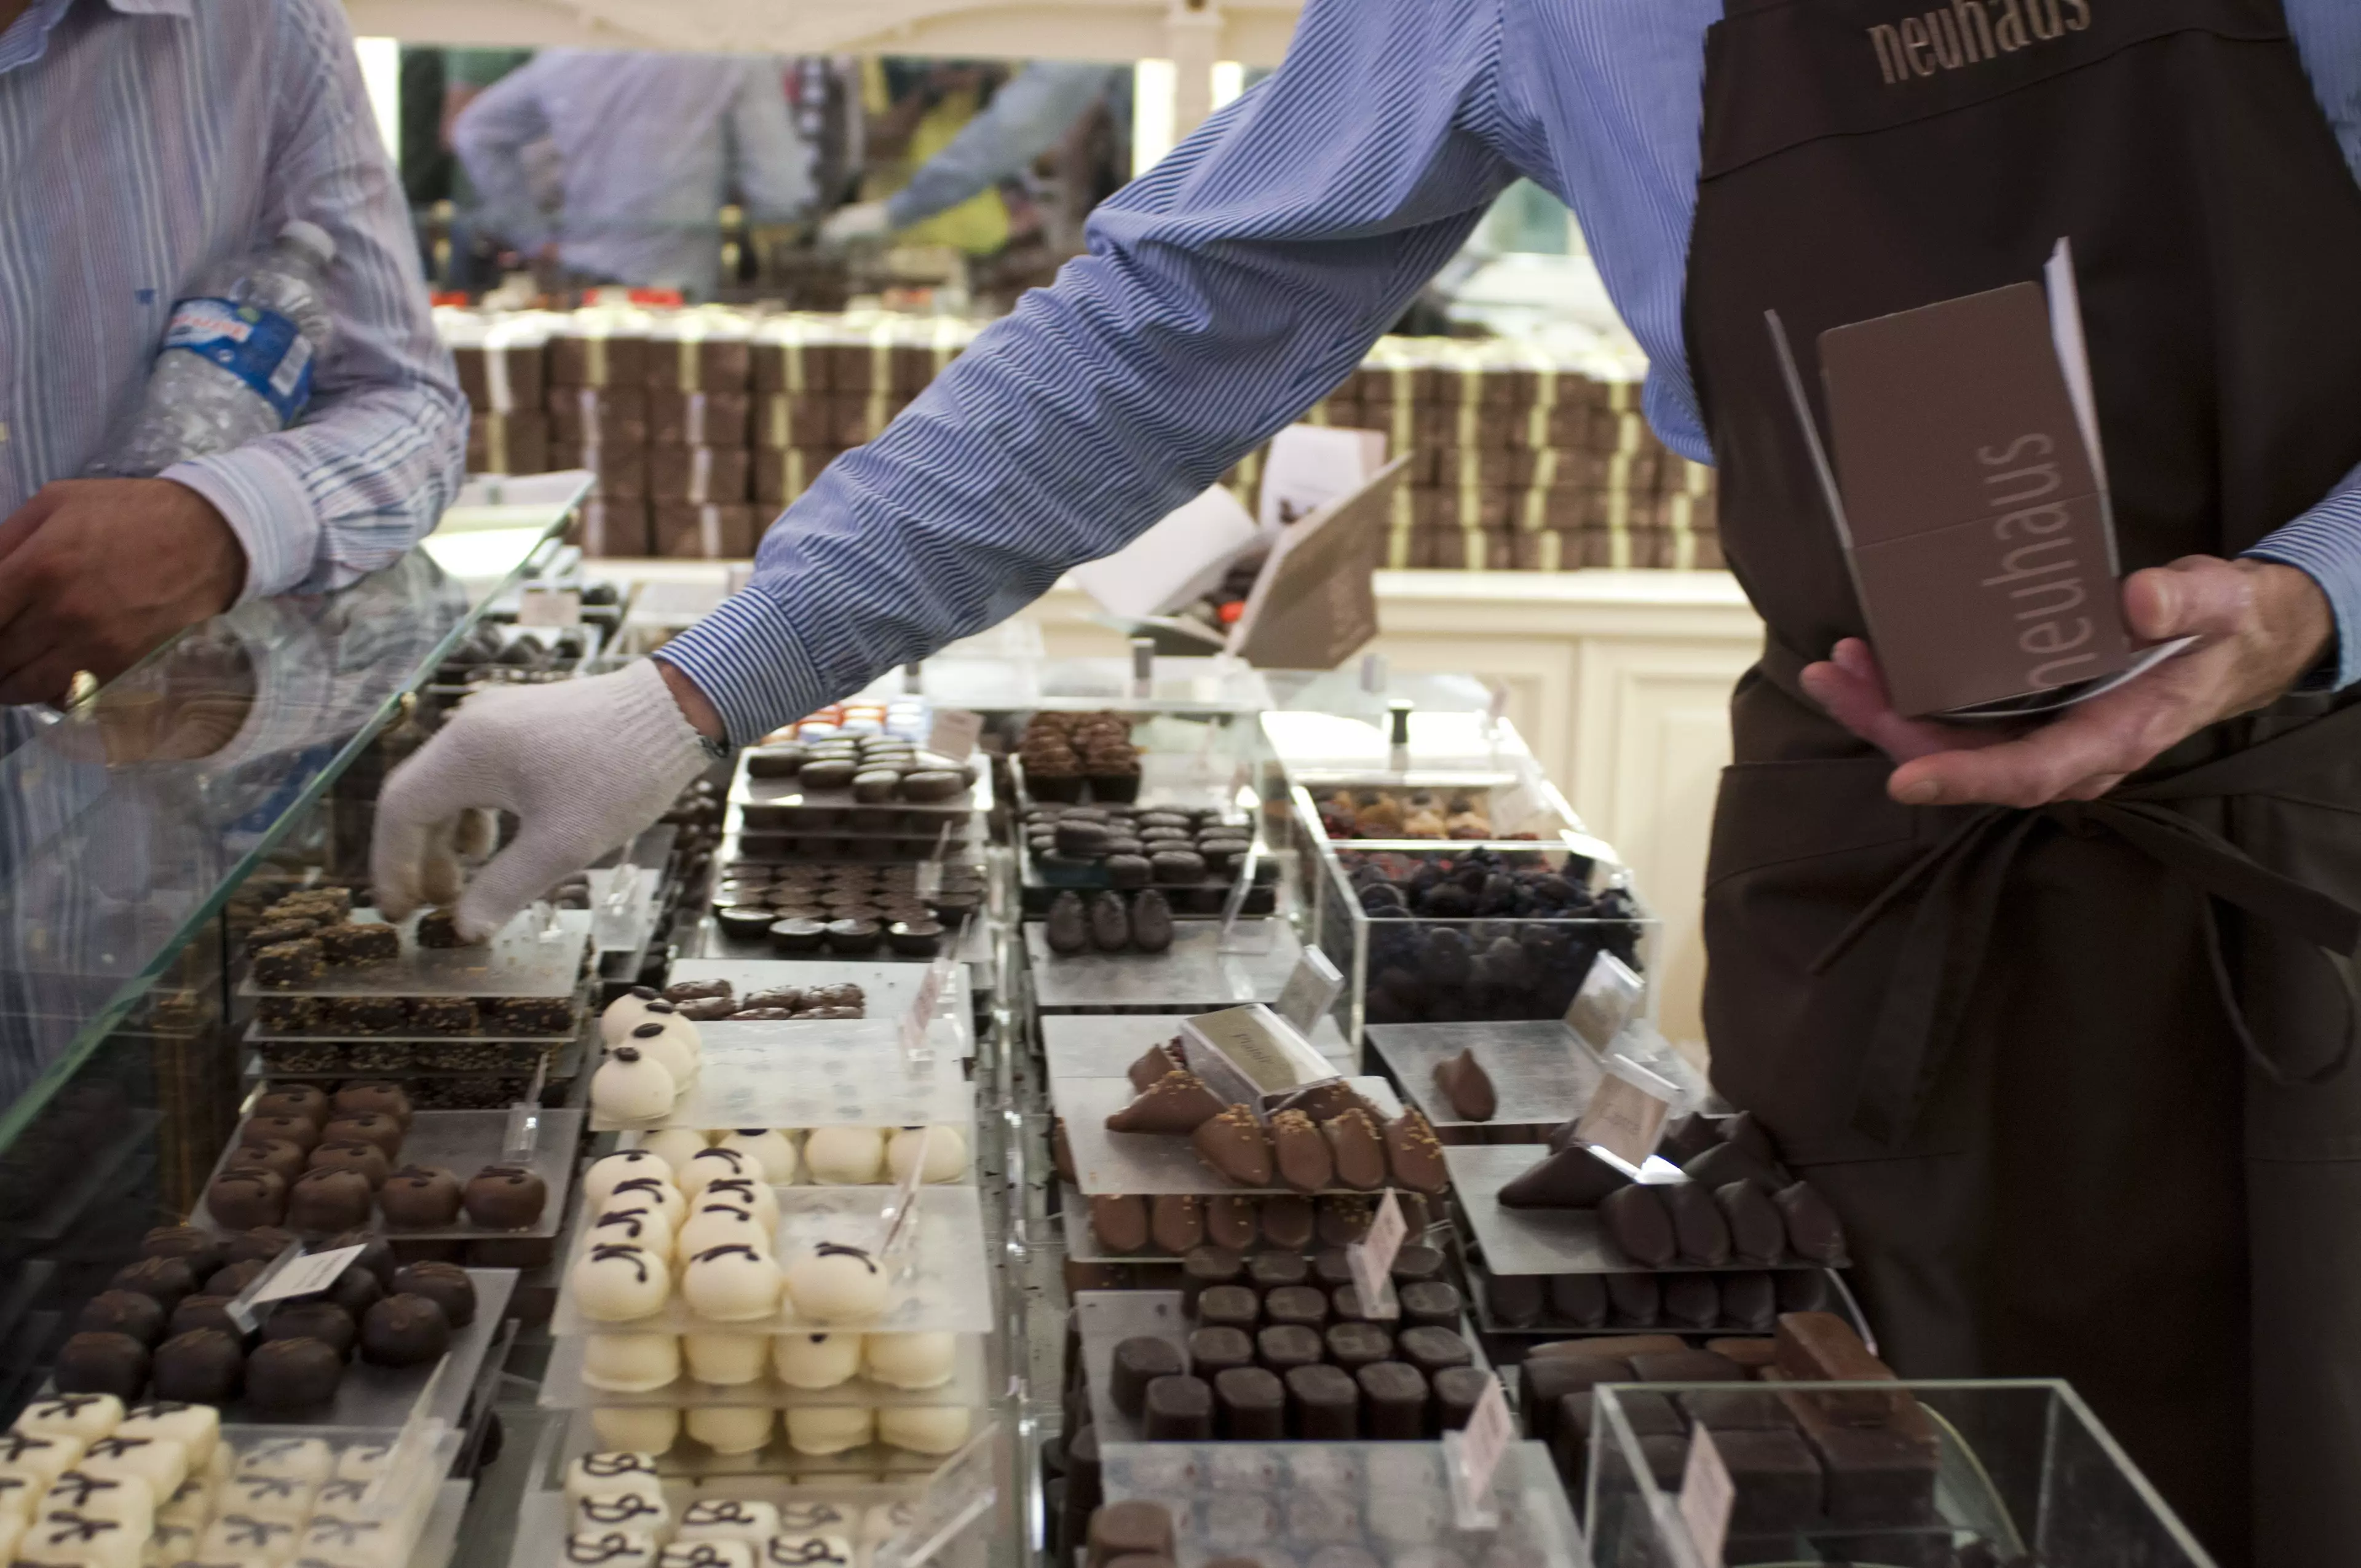 Neuhaus chocolates being sold inside Galeries Royales Saint-Hubert Arcade in Brussels.